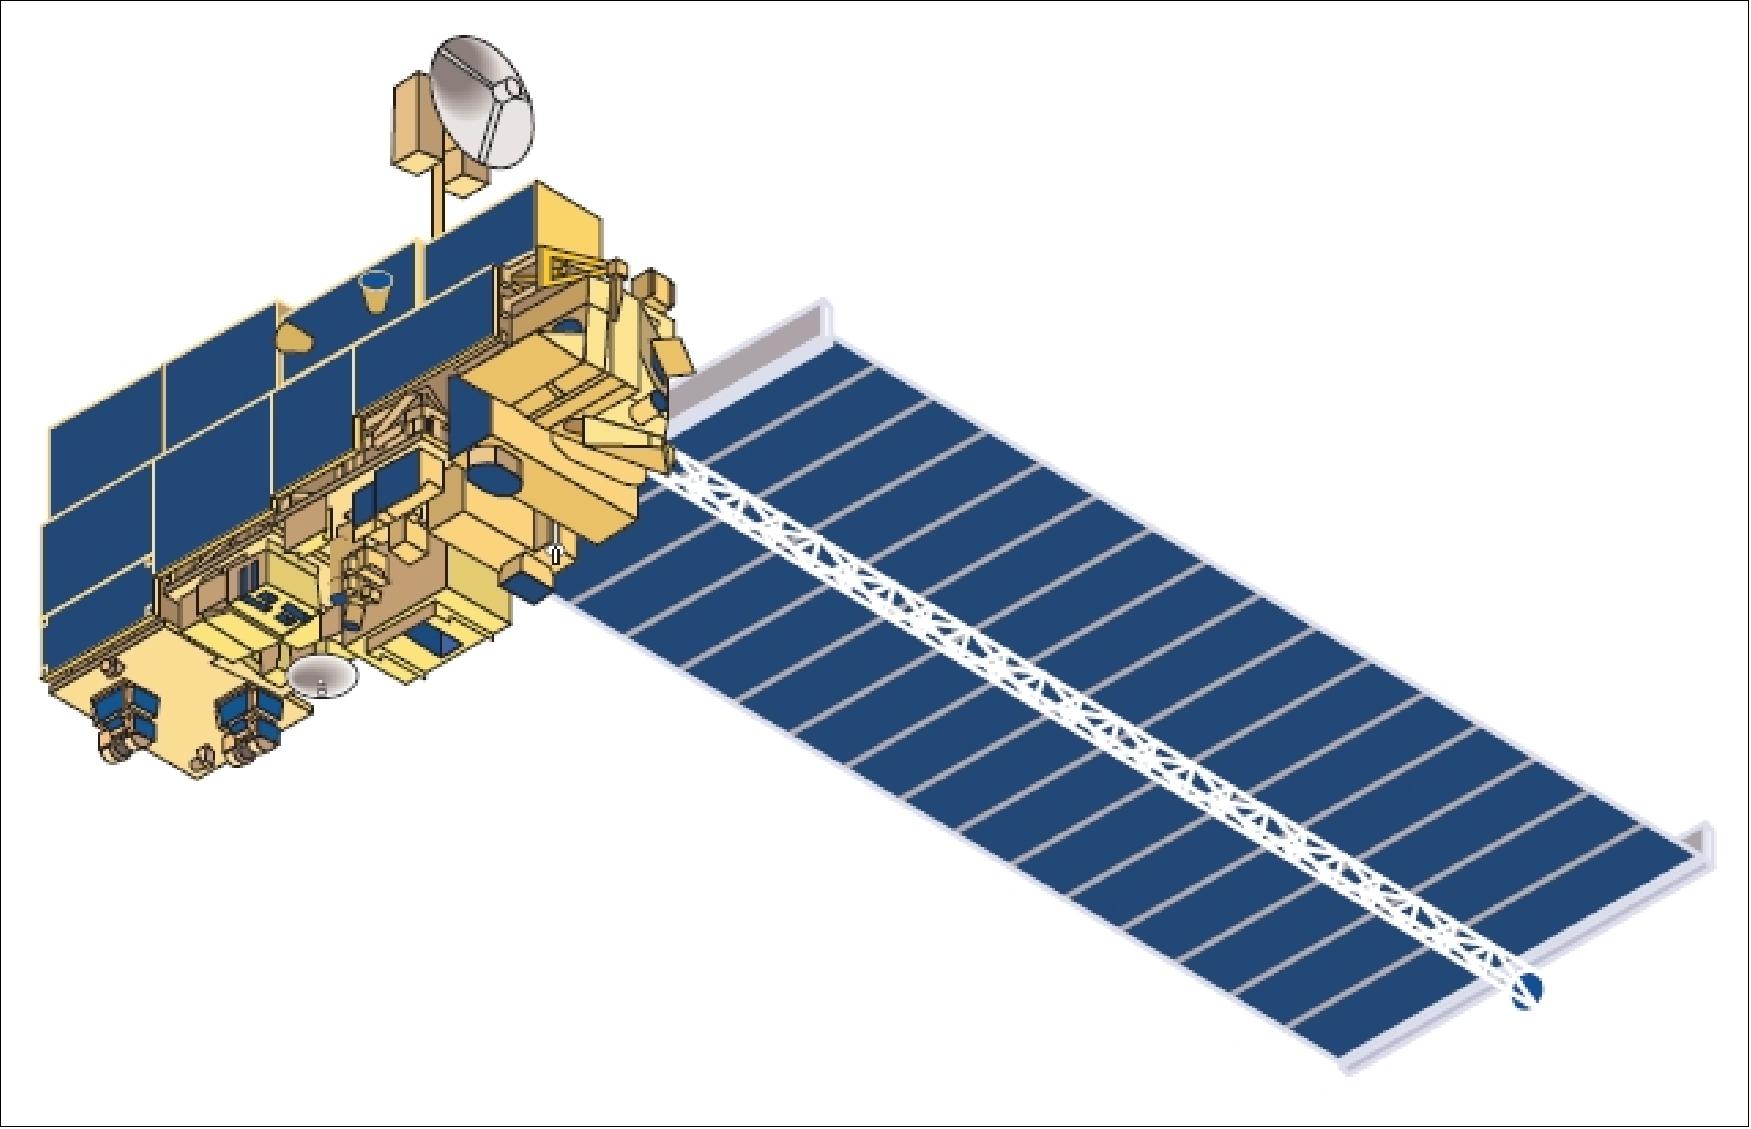 Figure 1: Illustration of the Terra spacecraft (image credit: NASA)